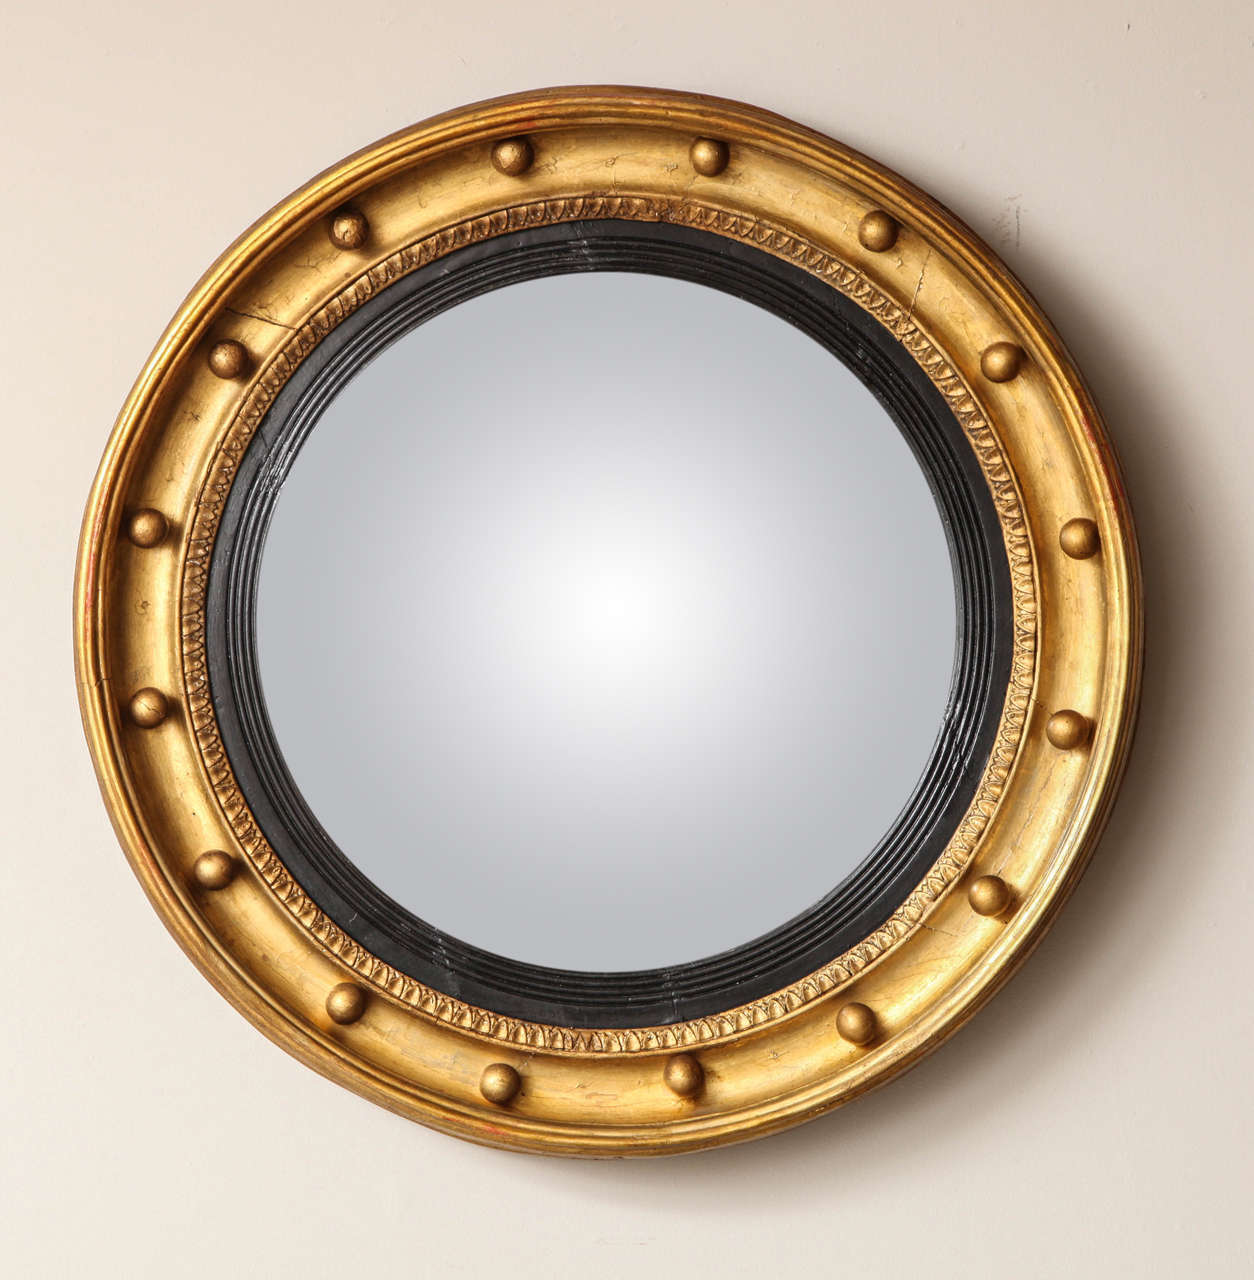 An English Regency bulls eye mirror having shaped ogee molded edge with ball finials.